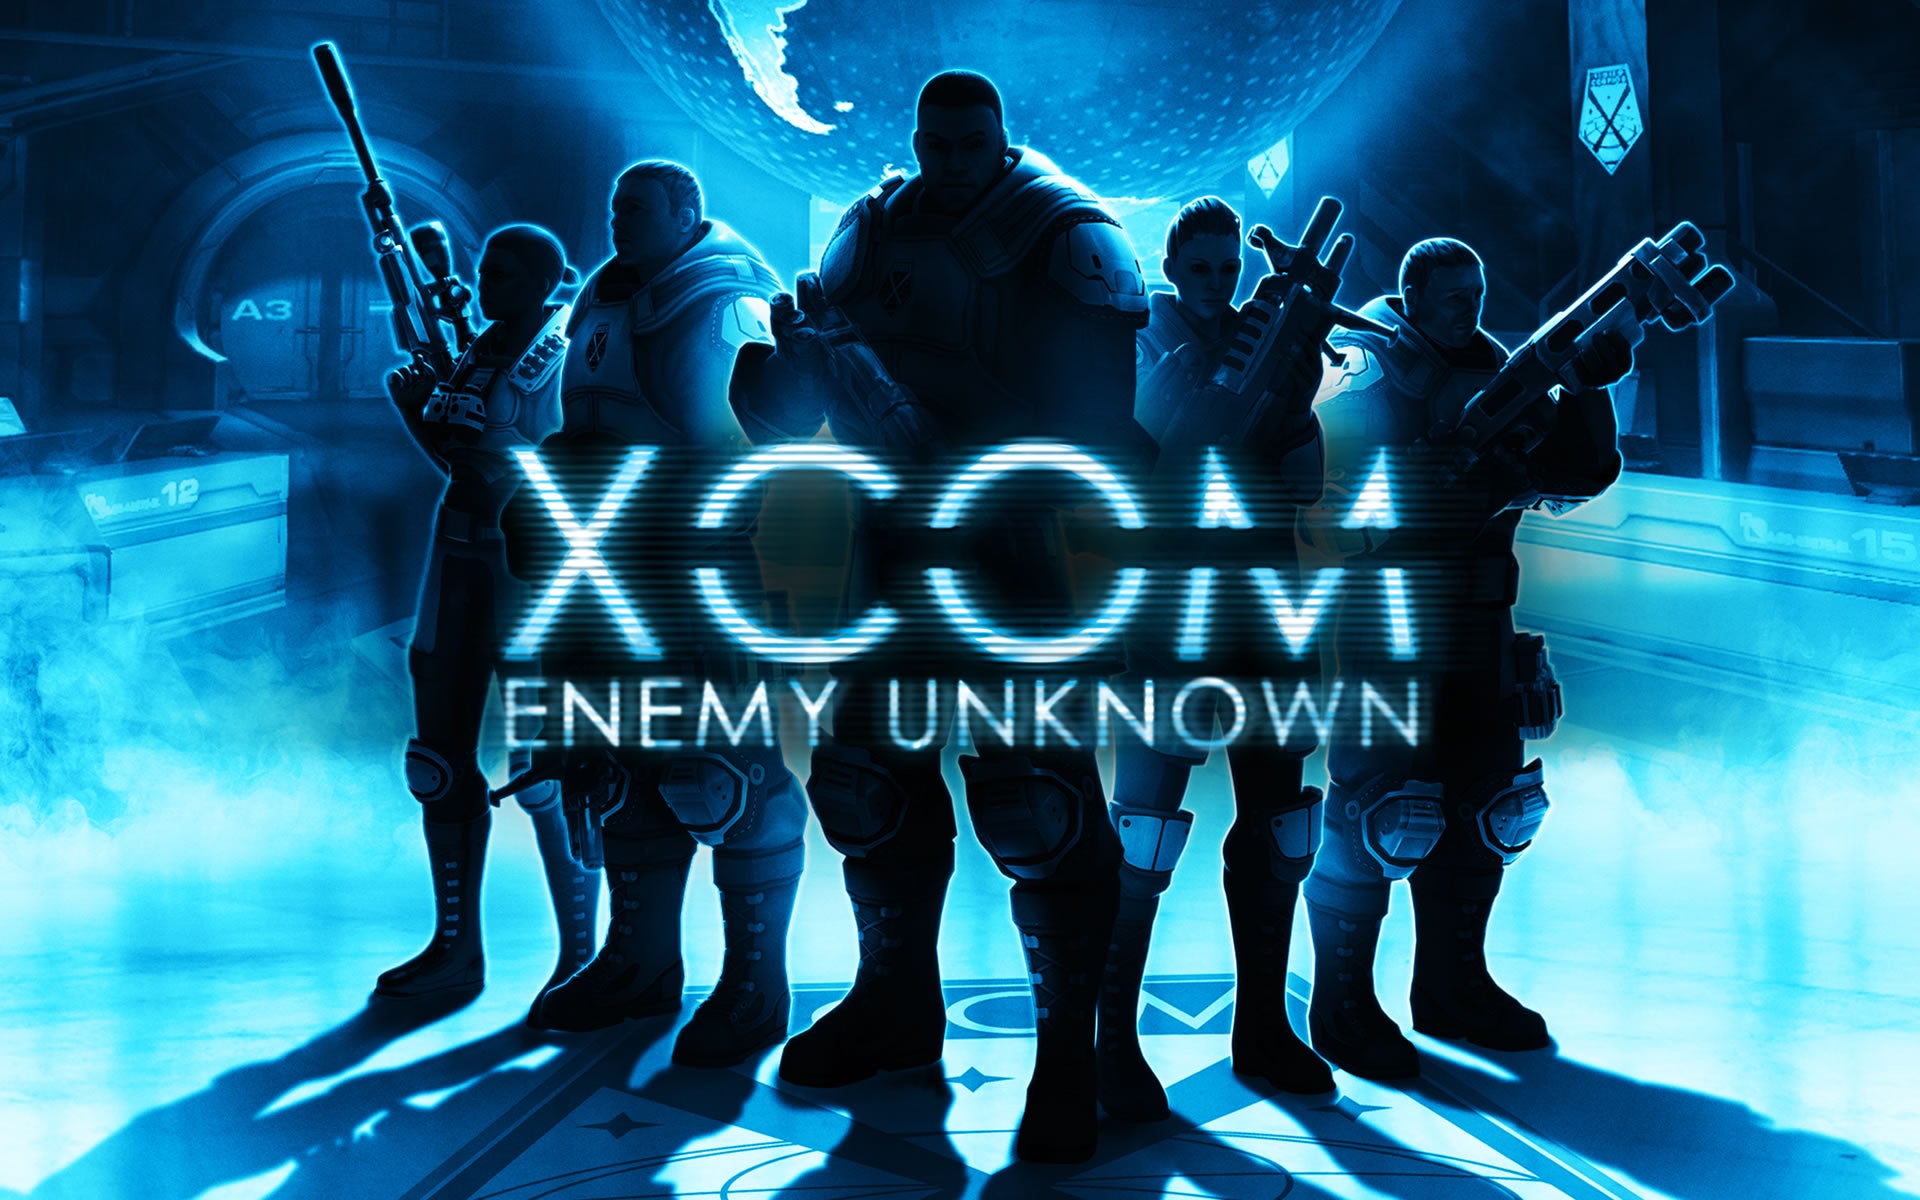 Imagem para XCOM: Enemy Unknown poderá chegar à PS Vita